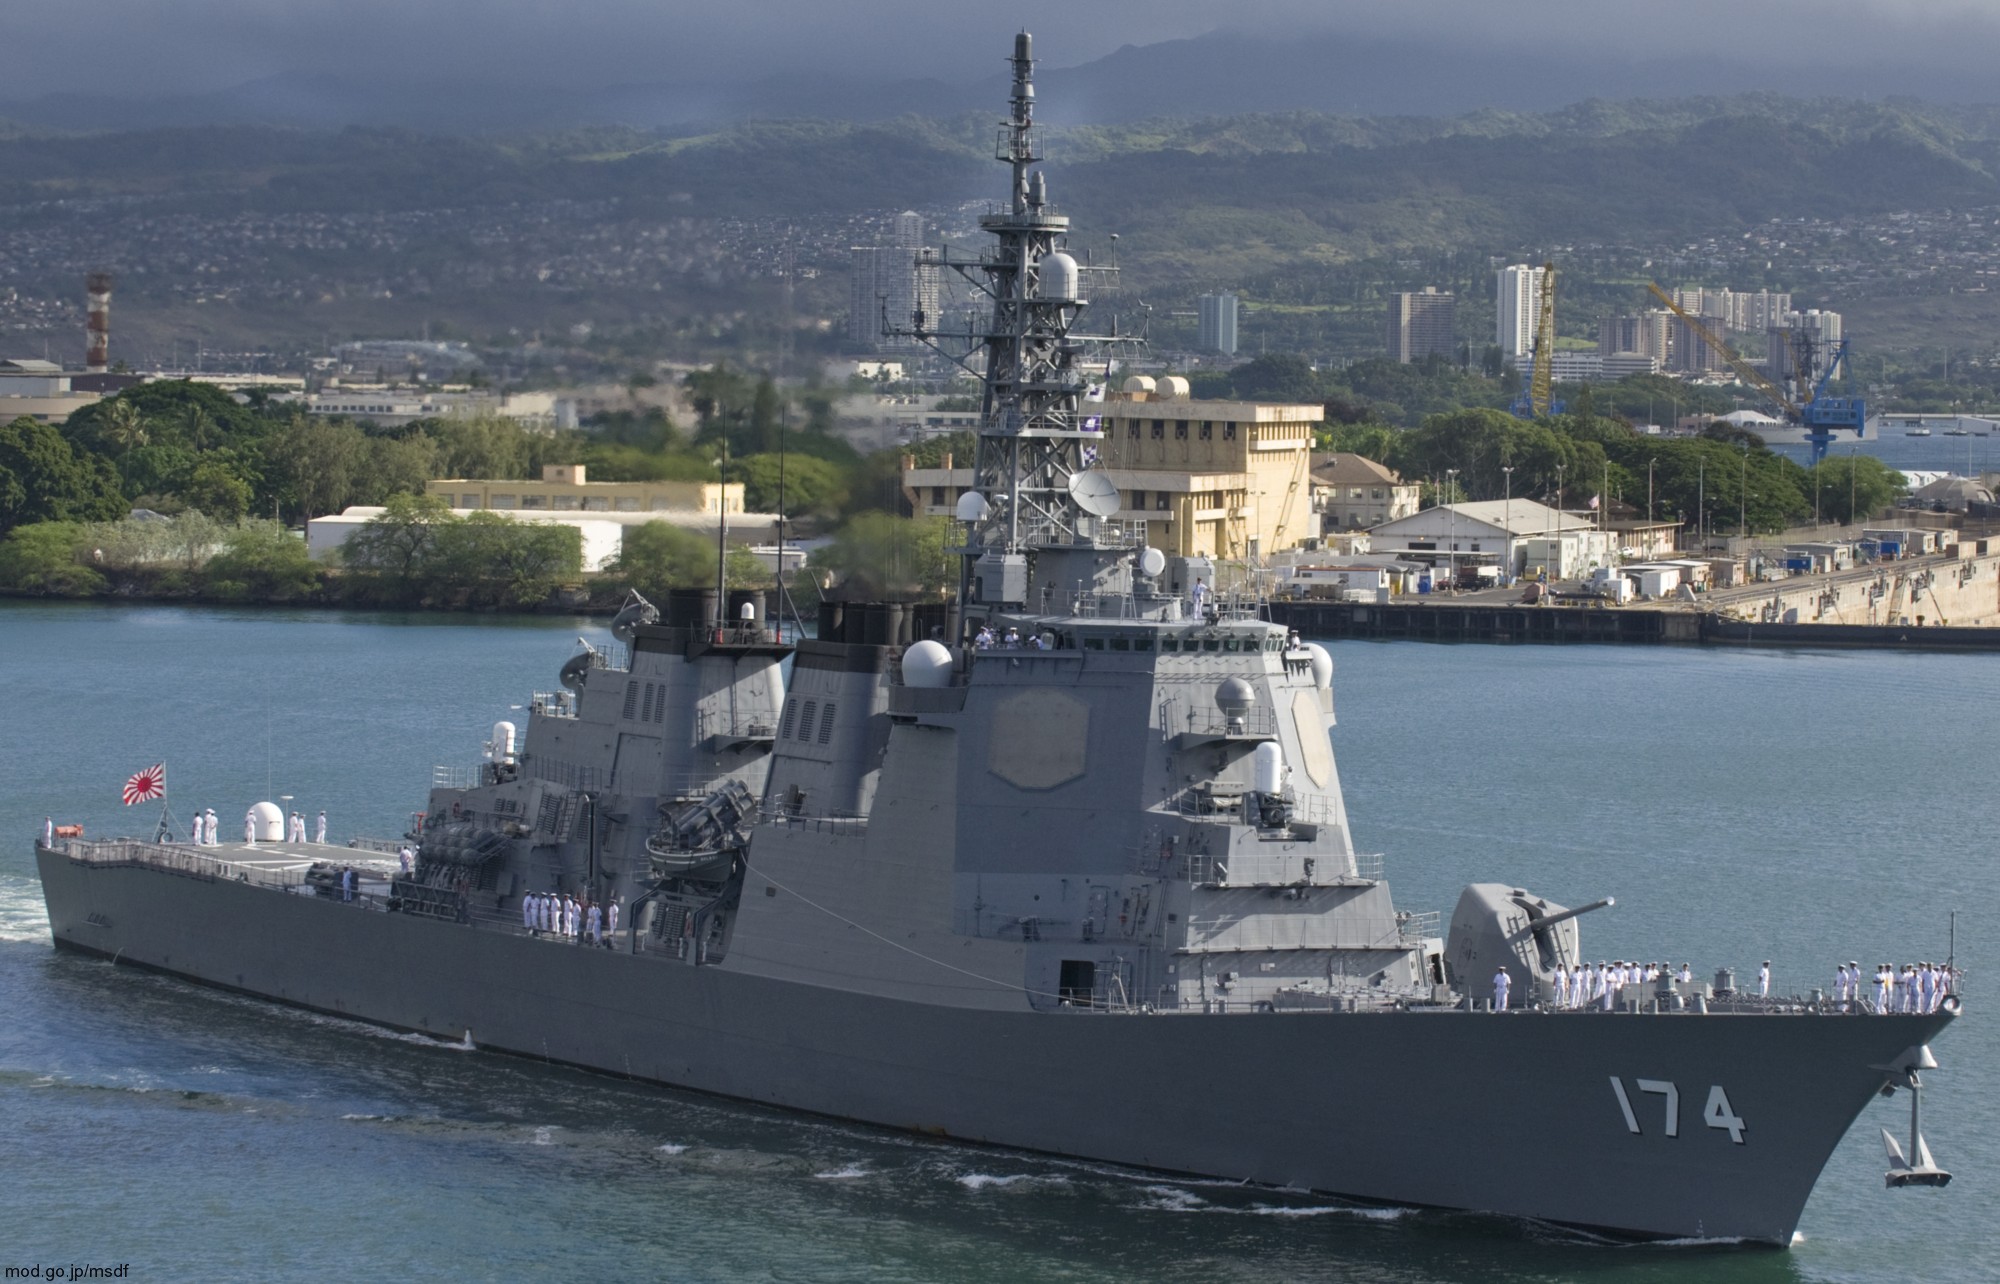 ddg-174 js kirishima kongo class guided missile destroyer aegis japan maritime self defense force jmsdf rimpac hawaii 05